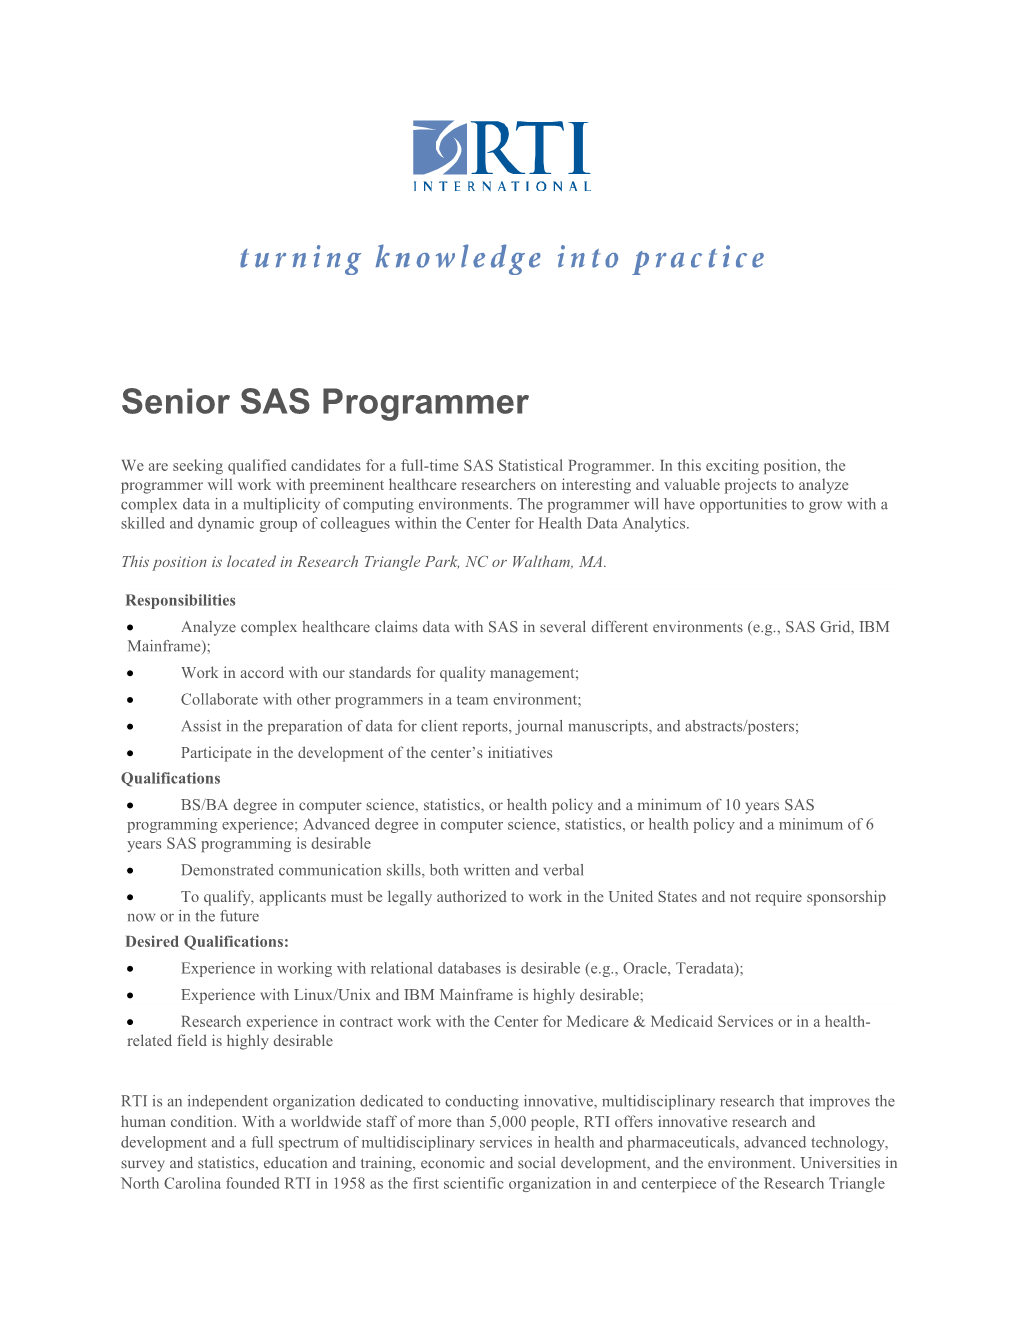 Senior SAS Programmer